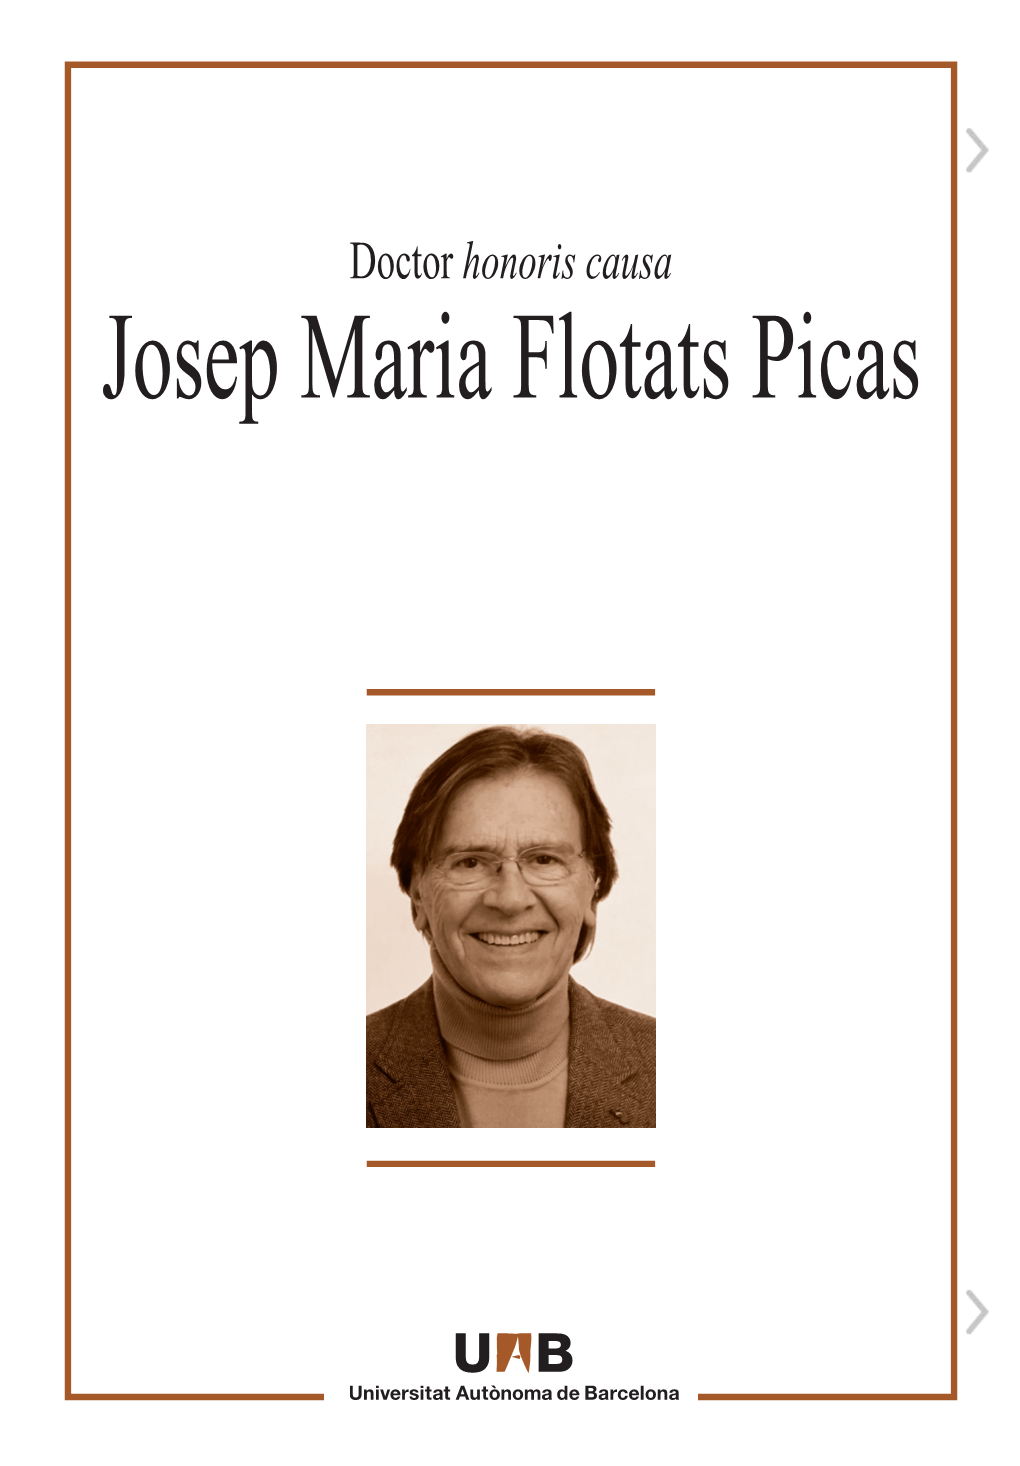 Josep Maria Flotats Picas